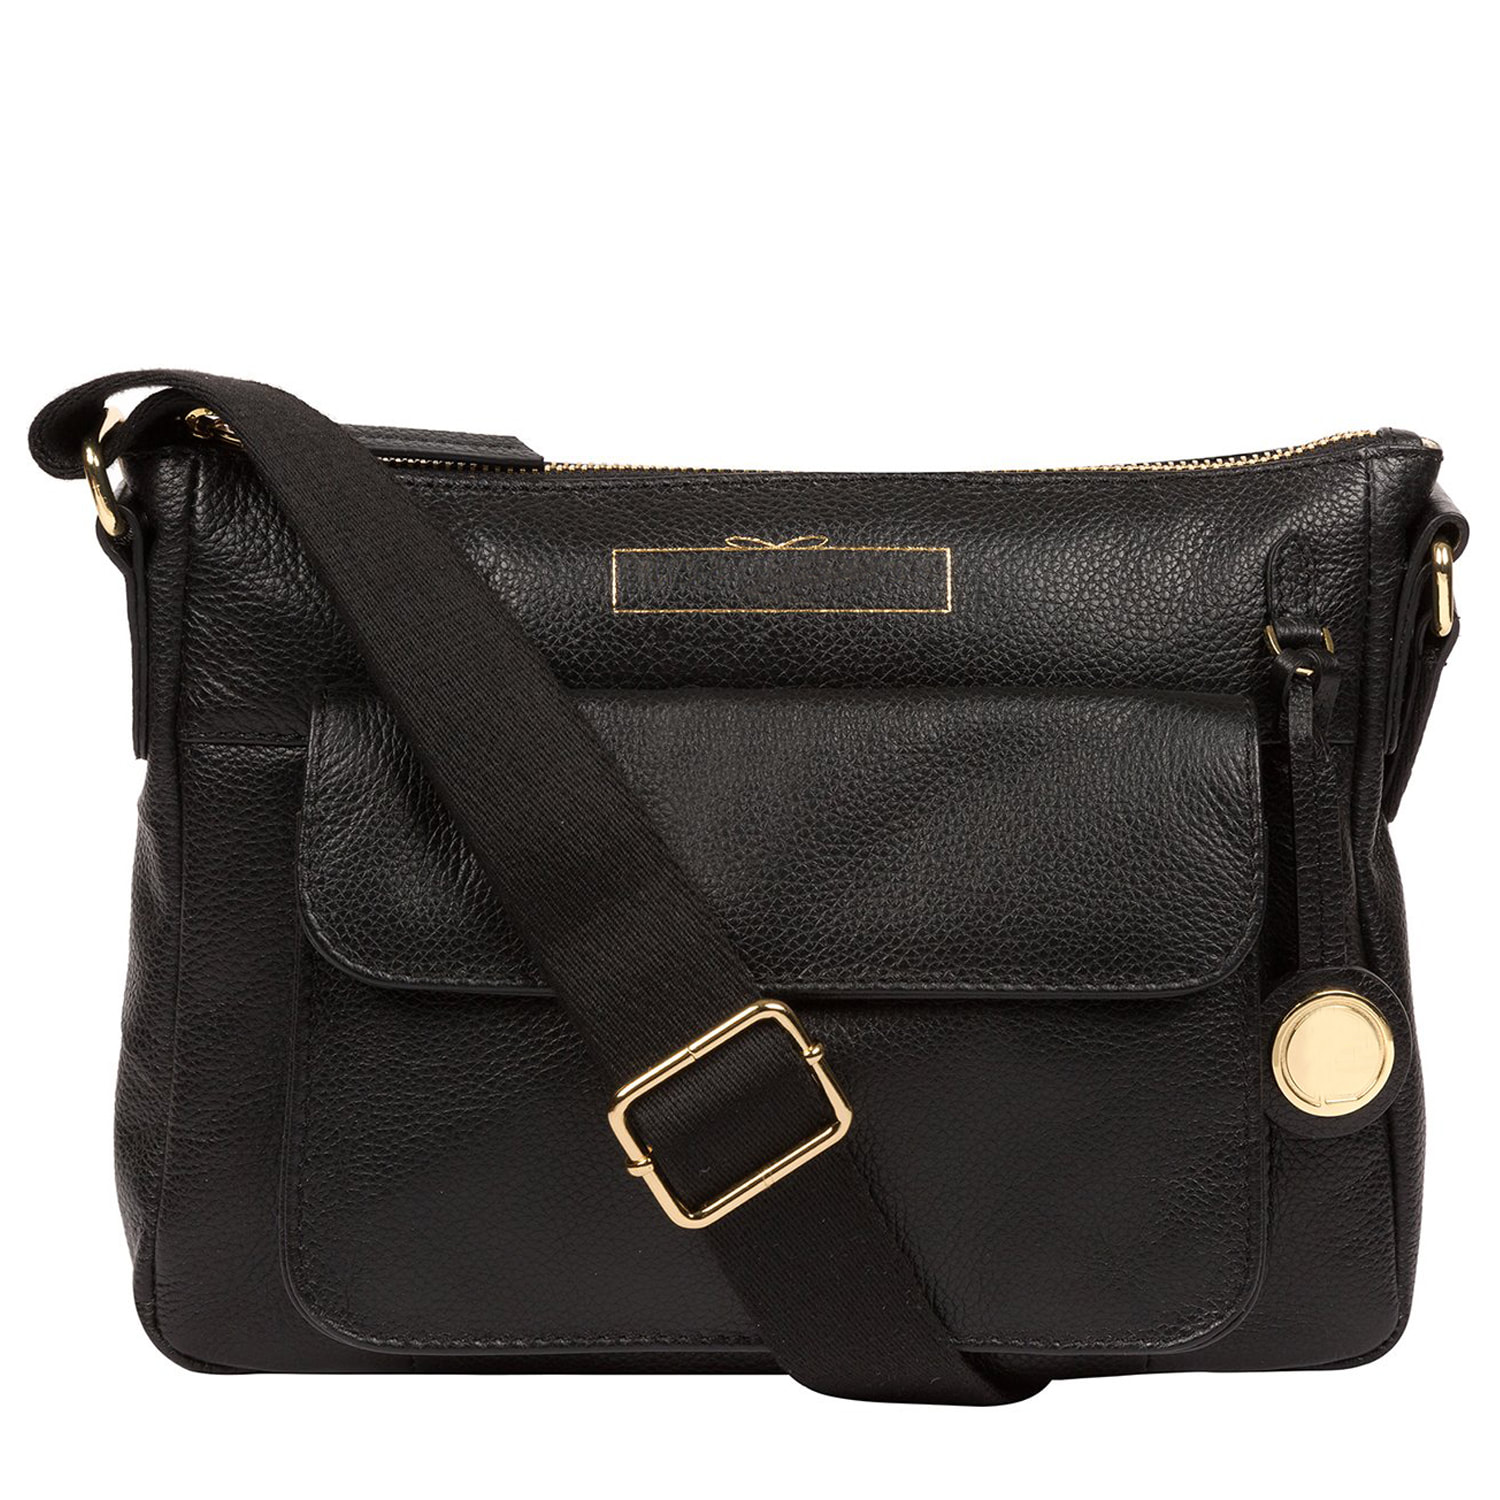 Small Black Leather Shoulder Bag, Cross Body Bag